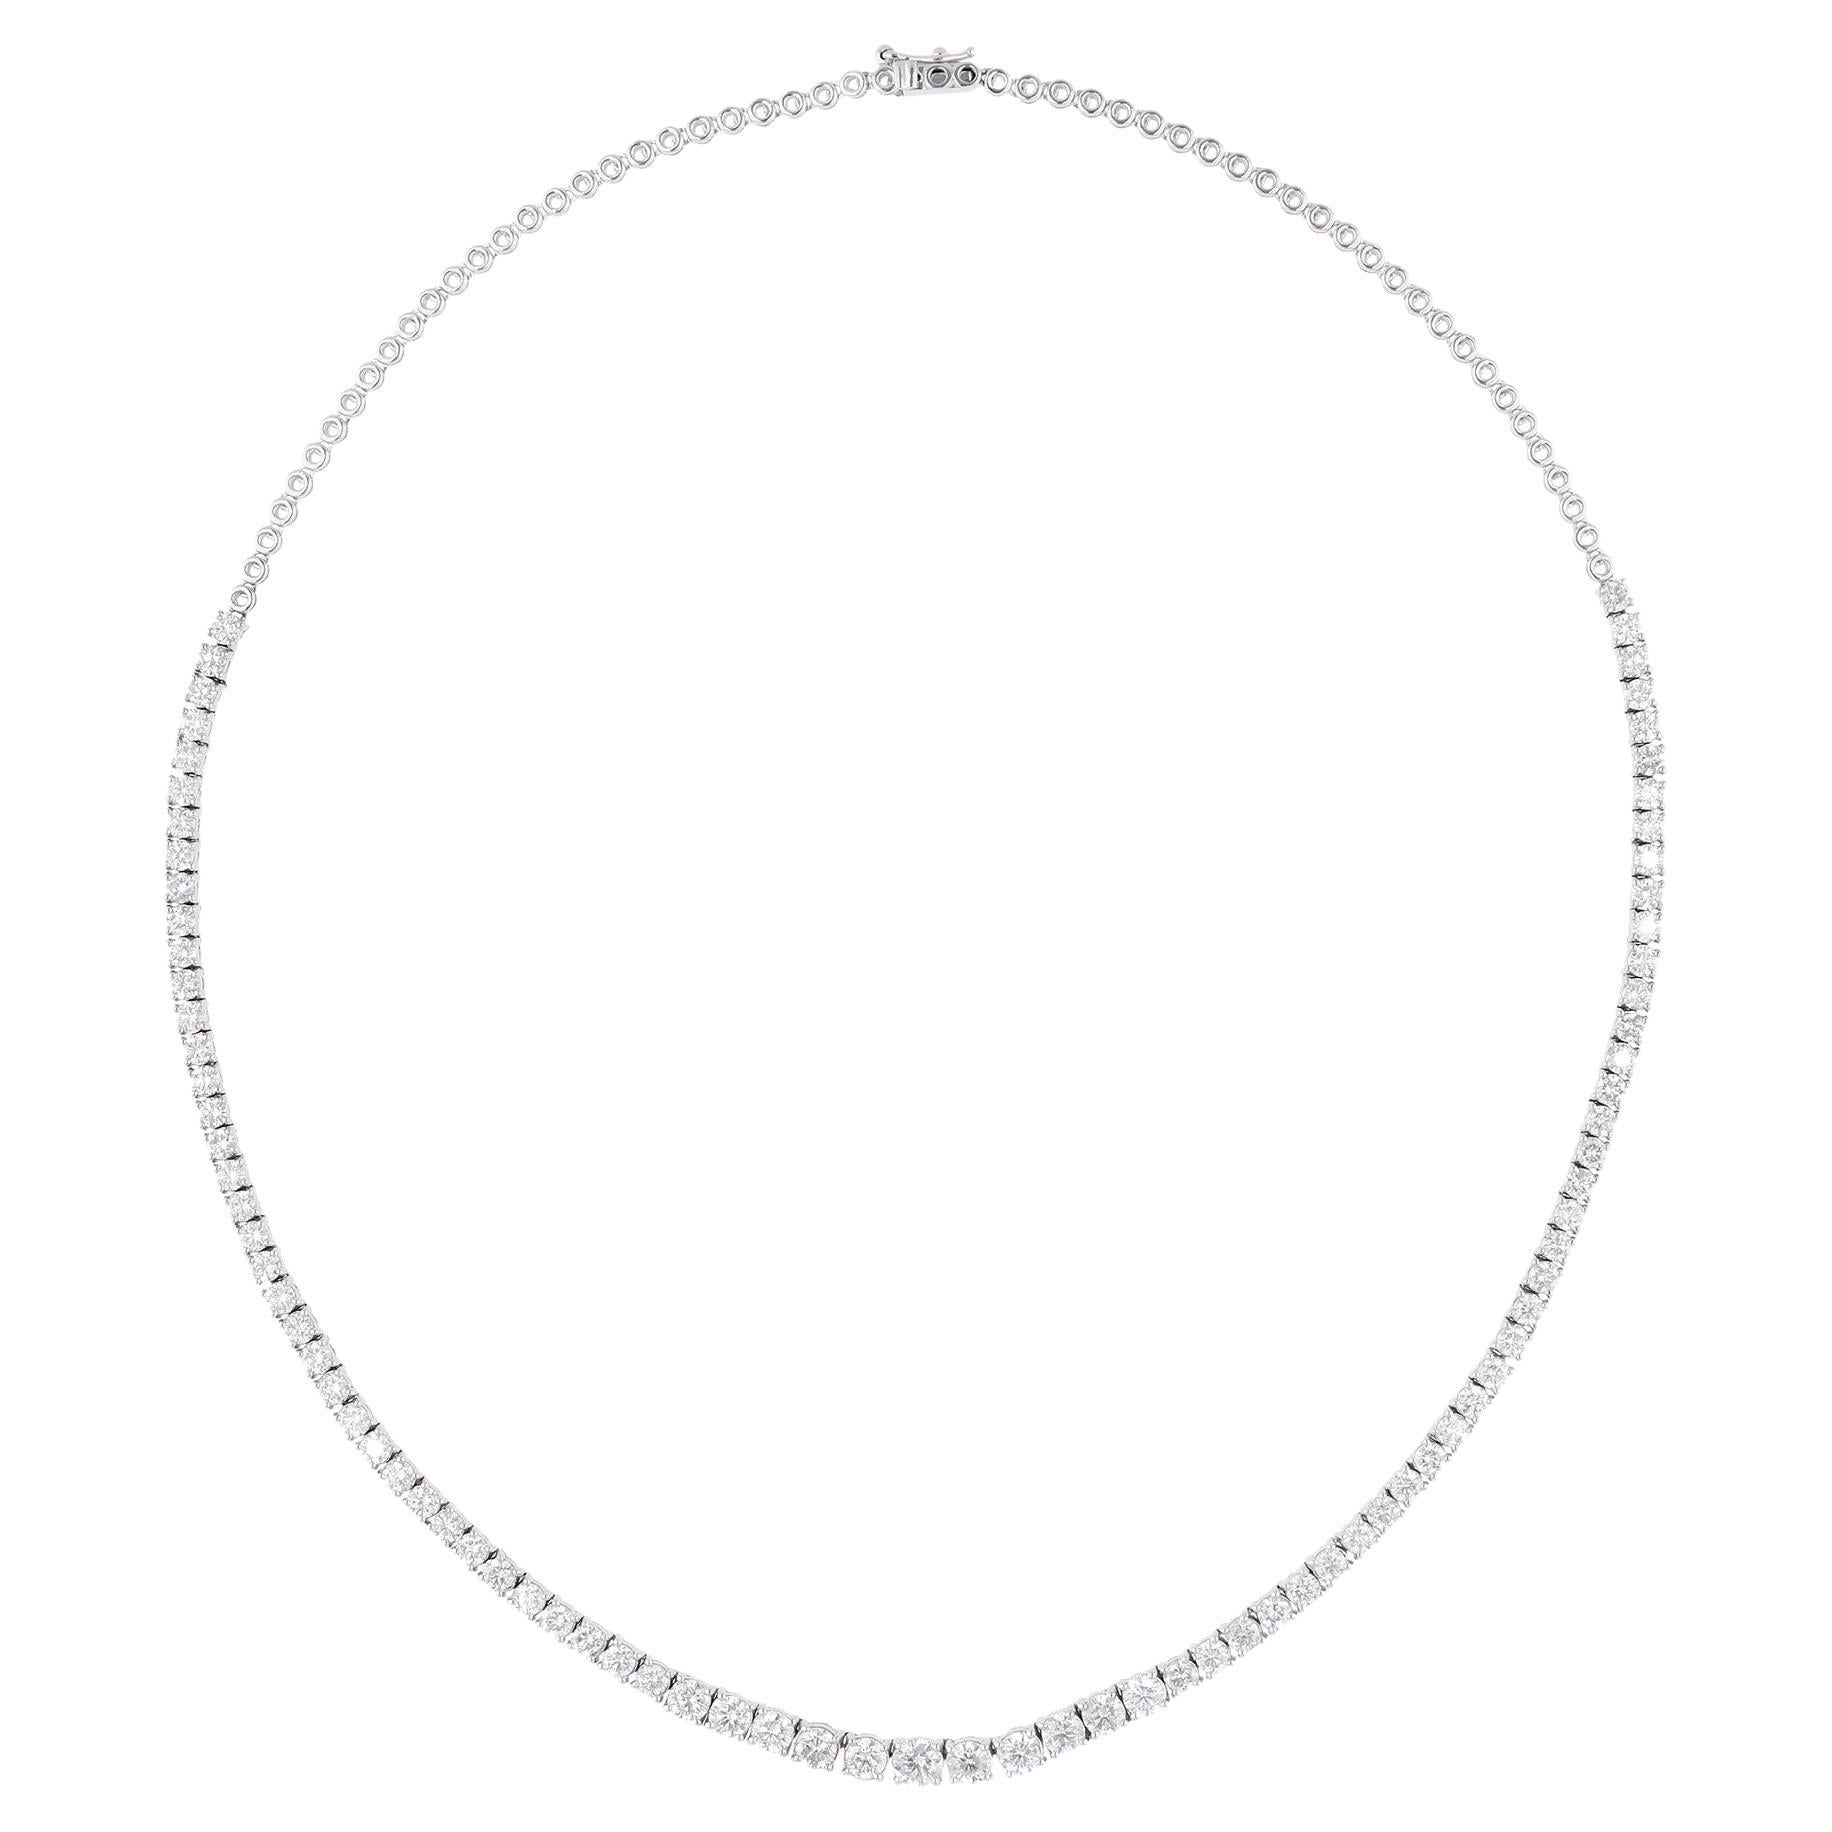 Real 7.18 Carat SI Clarity HI Color Diamond Chain Necklace 14 Karat White Gold